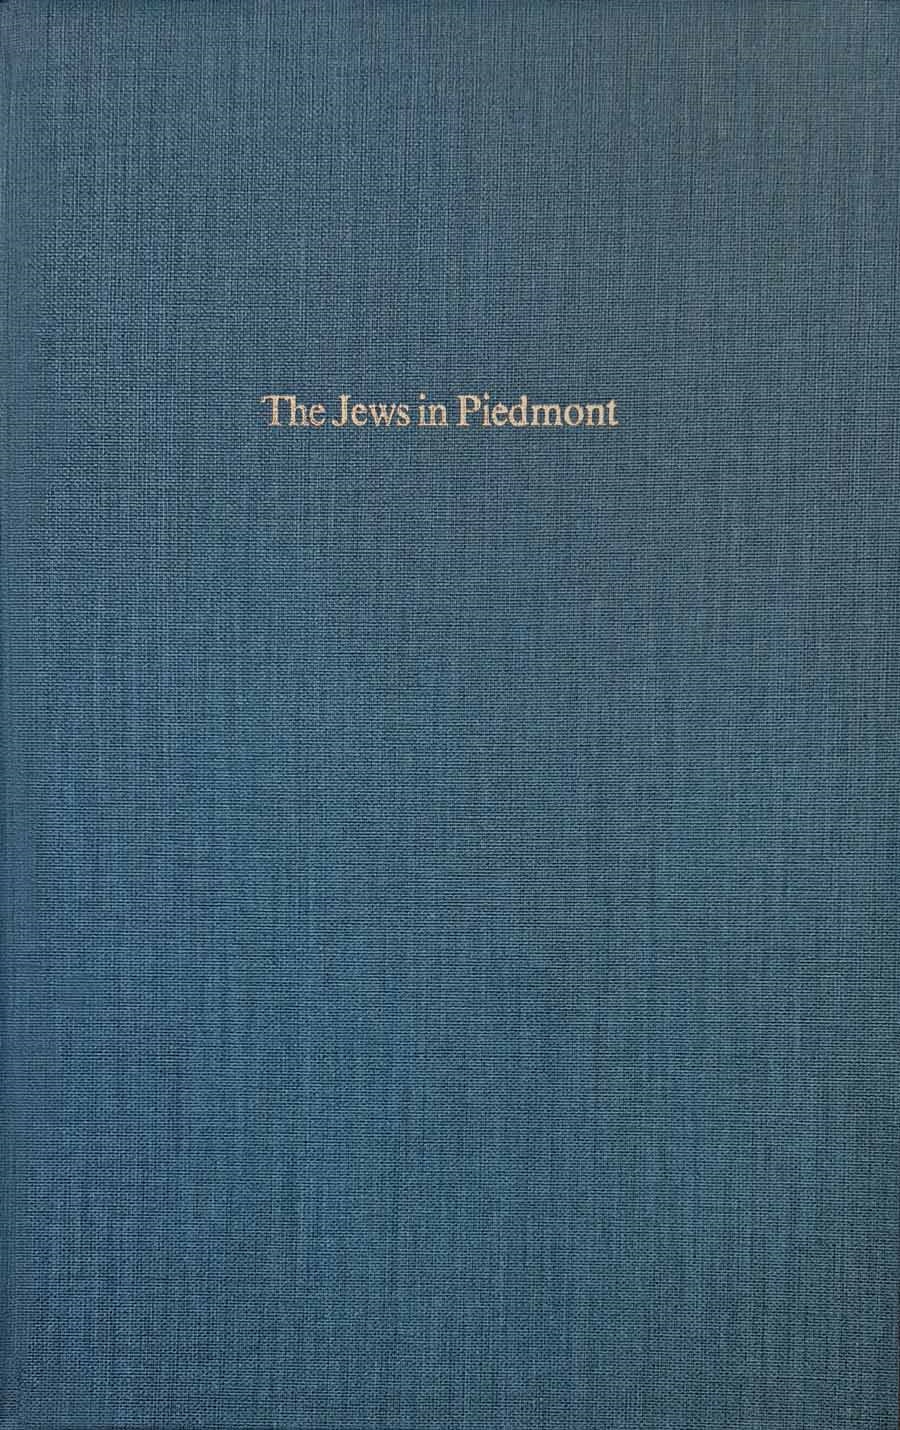 The Jews in Piedmont